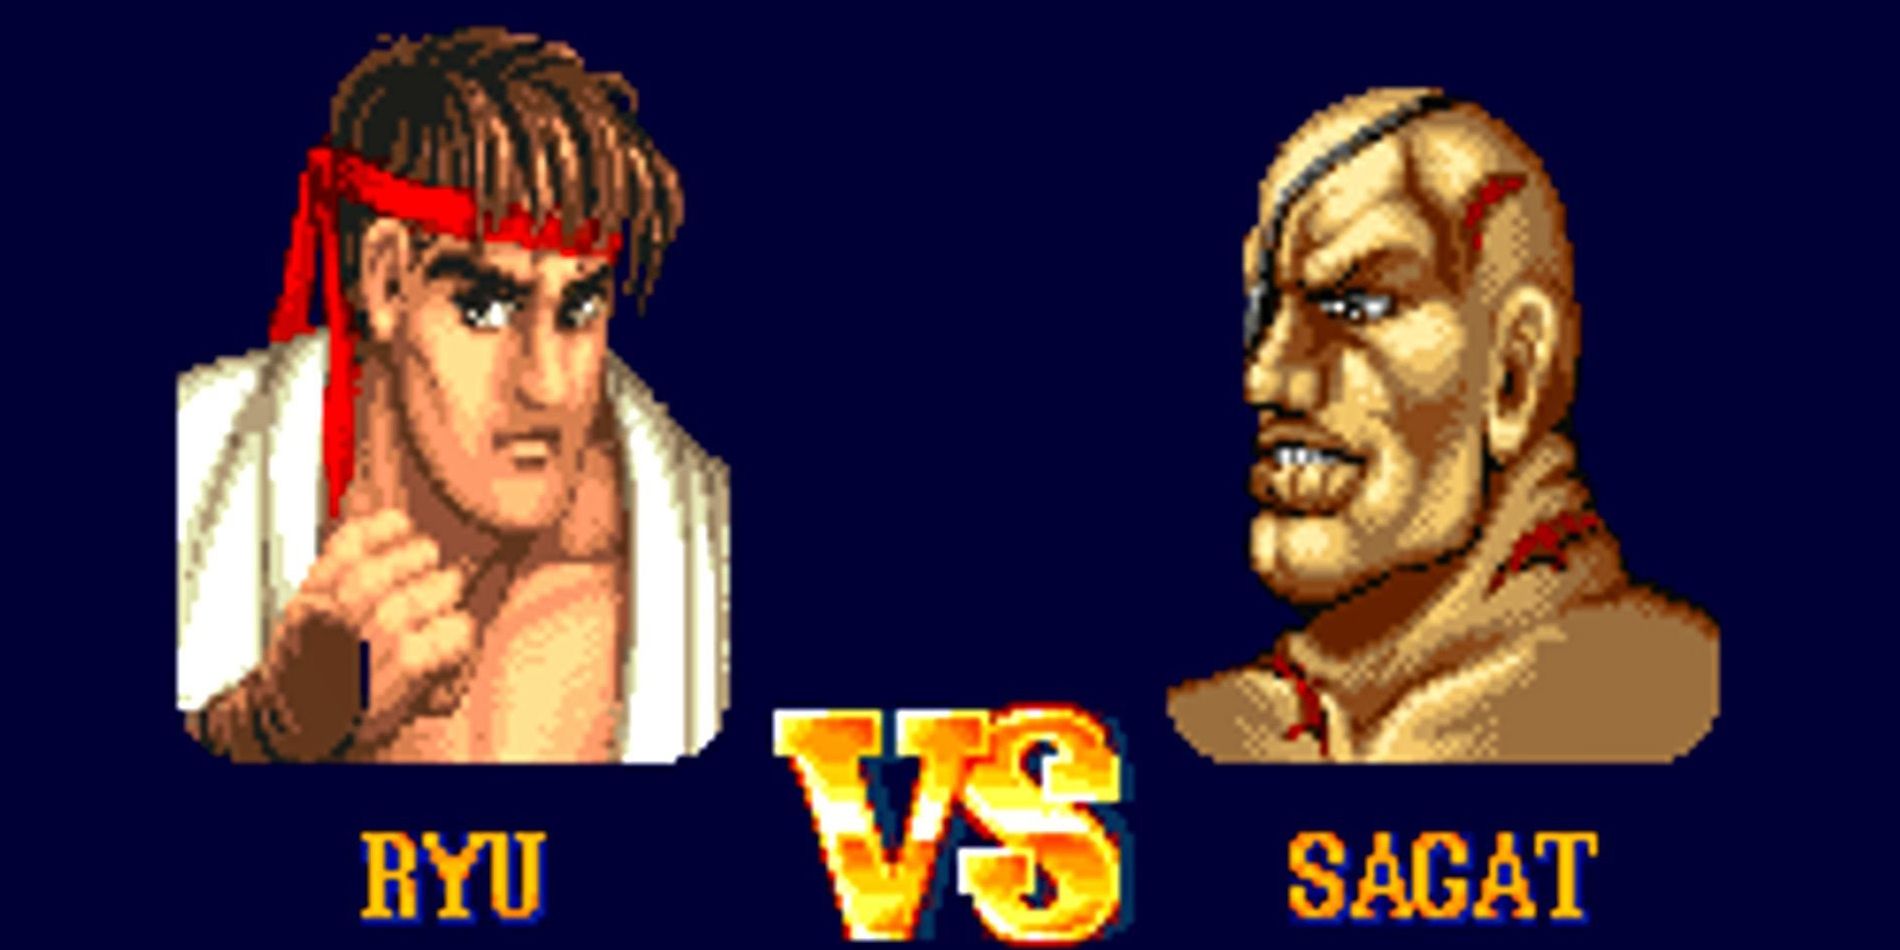 Ryu vs Sagat title screen